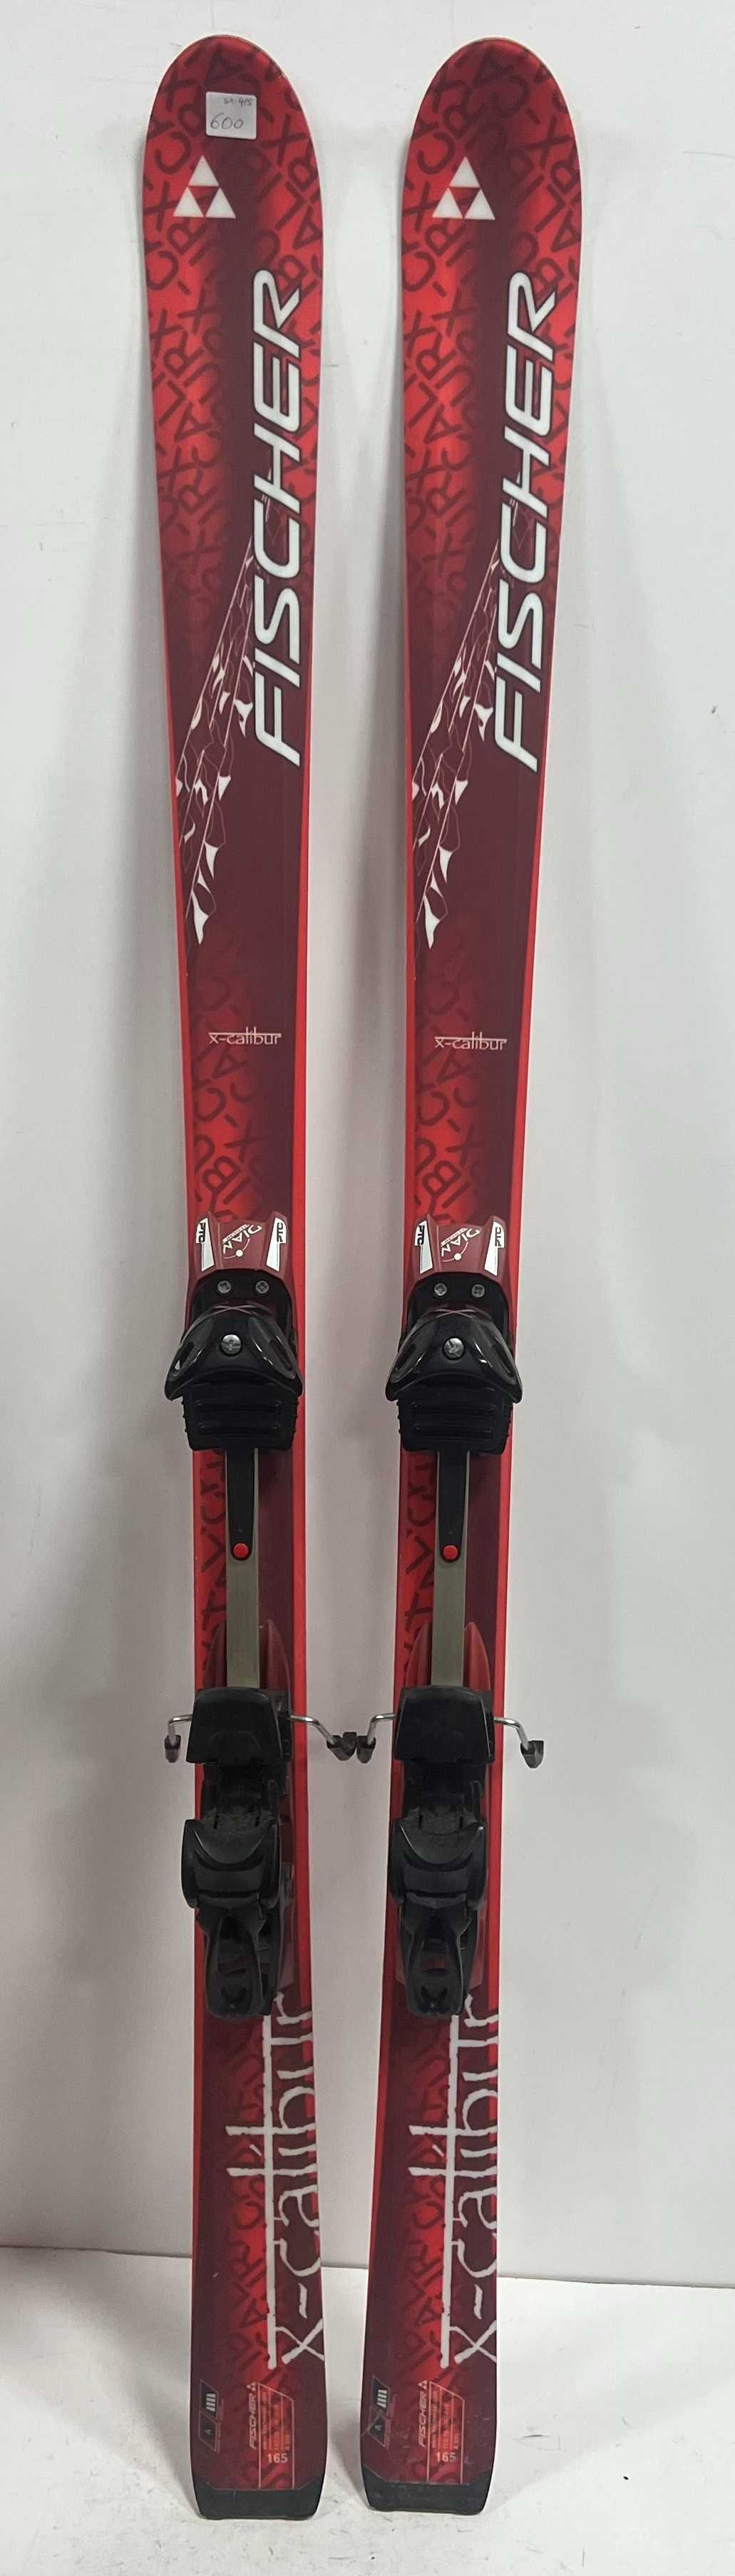 Schi ski Tura Fischer x calibur 165cm + leg diamir